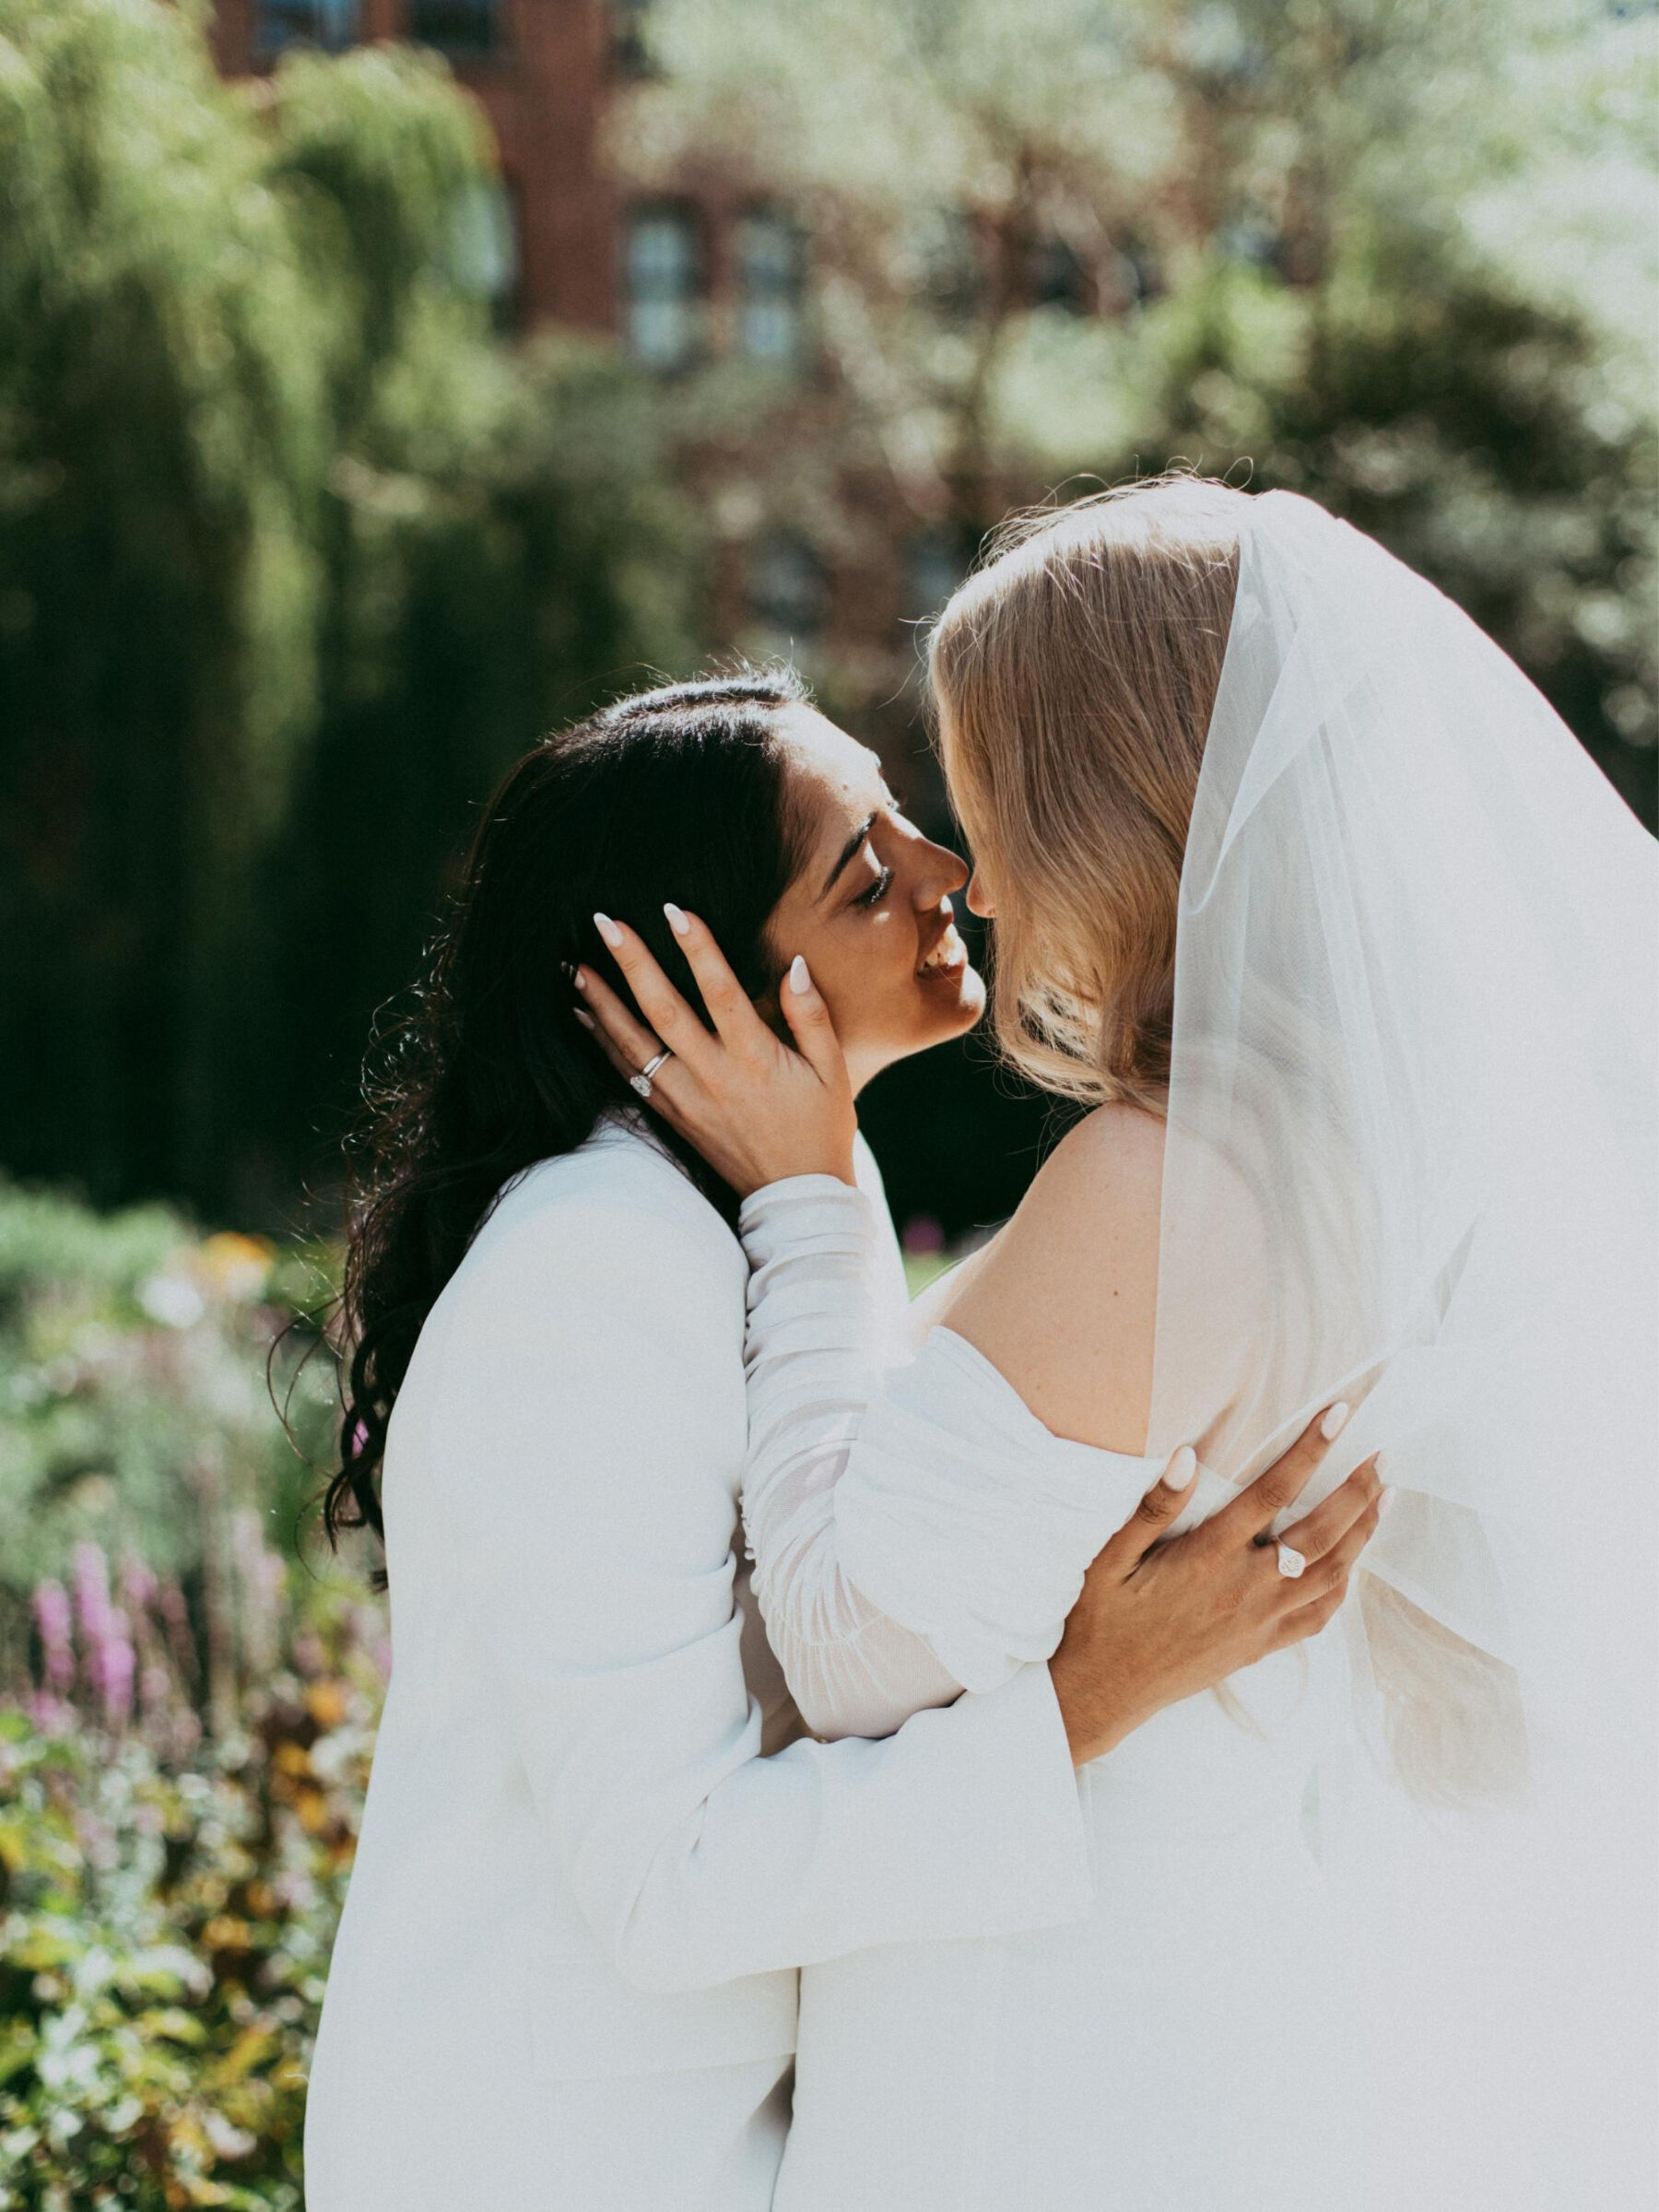 Lesbian brides in a tender embrace. Daniel Mice Photography.